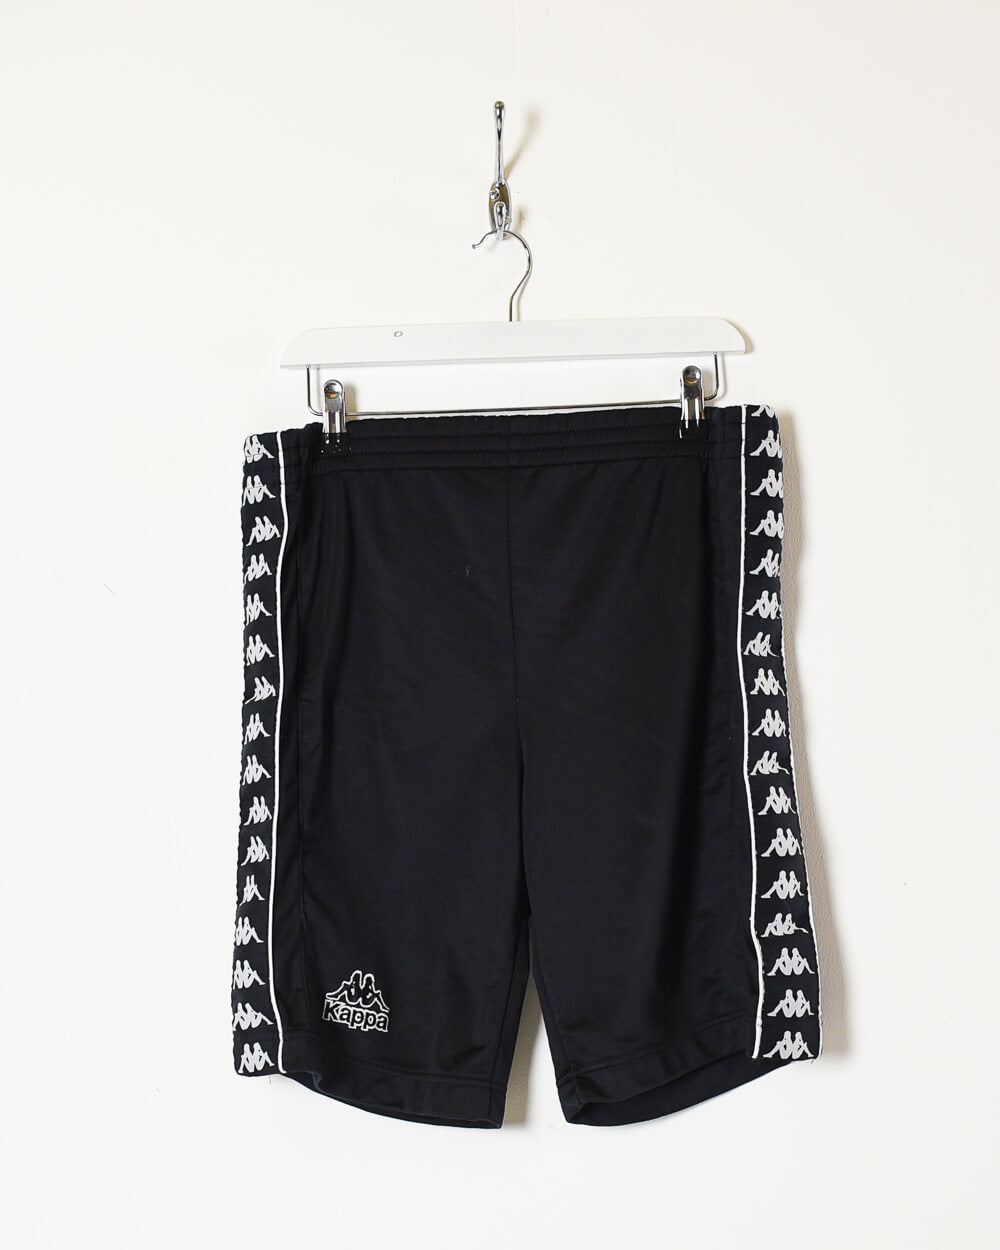 Black Kappa Popper Shorts - W34